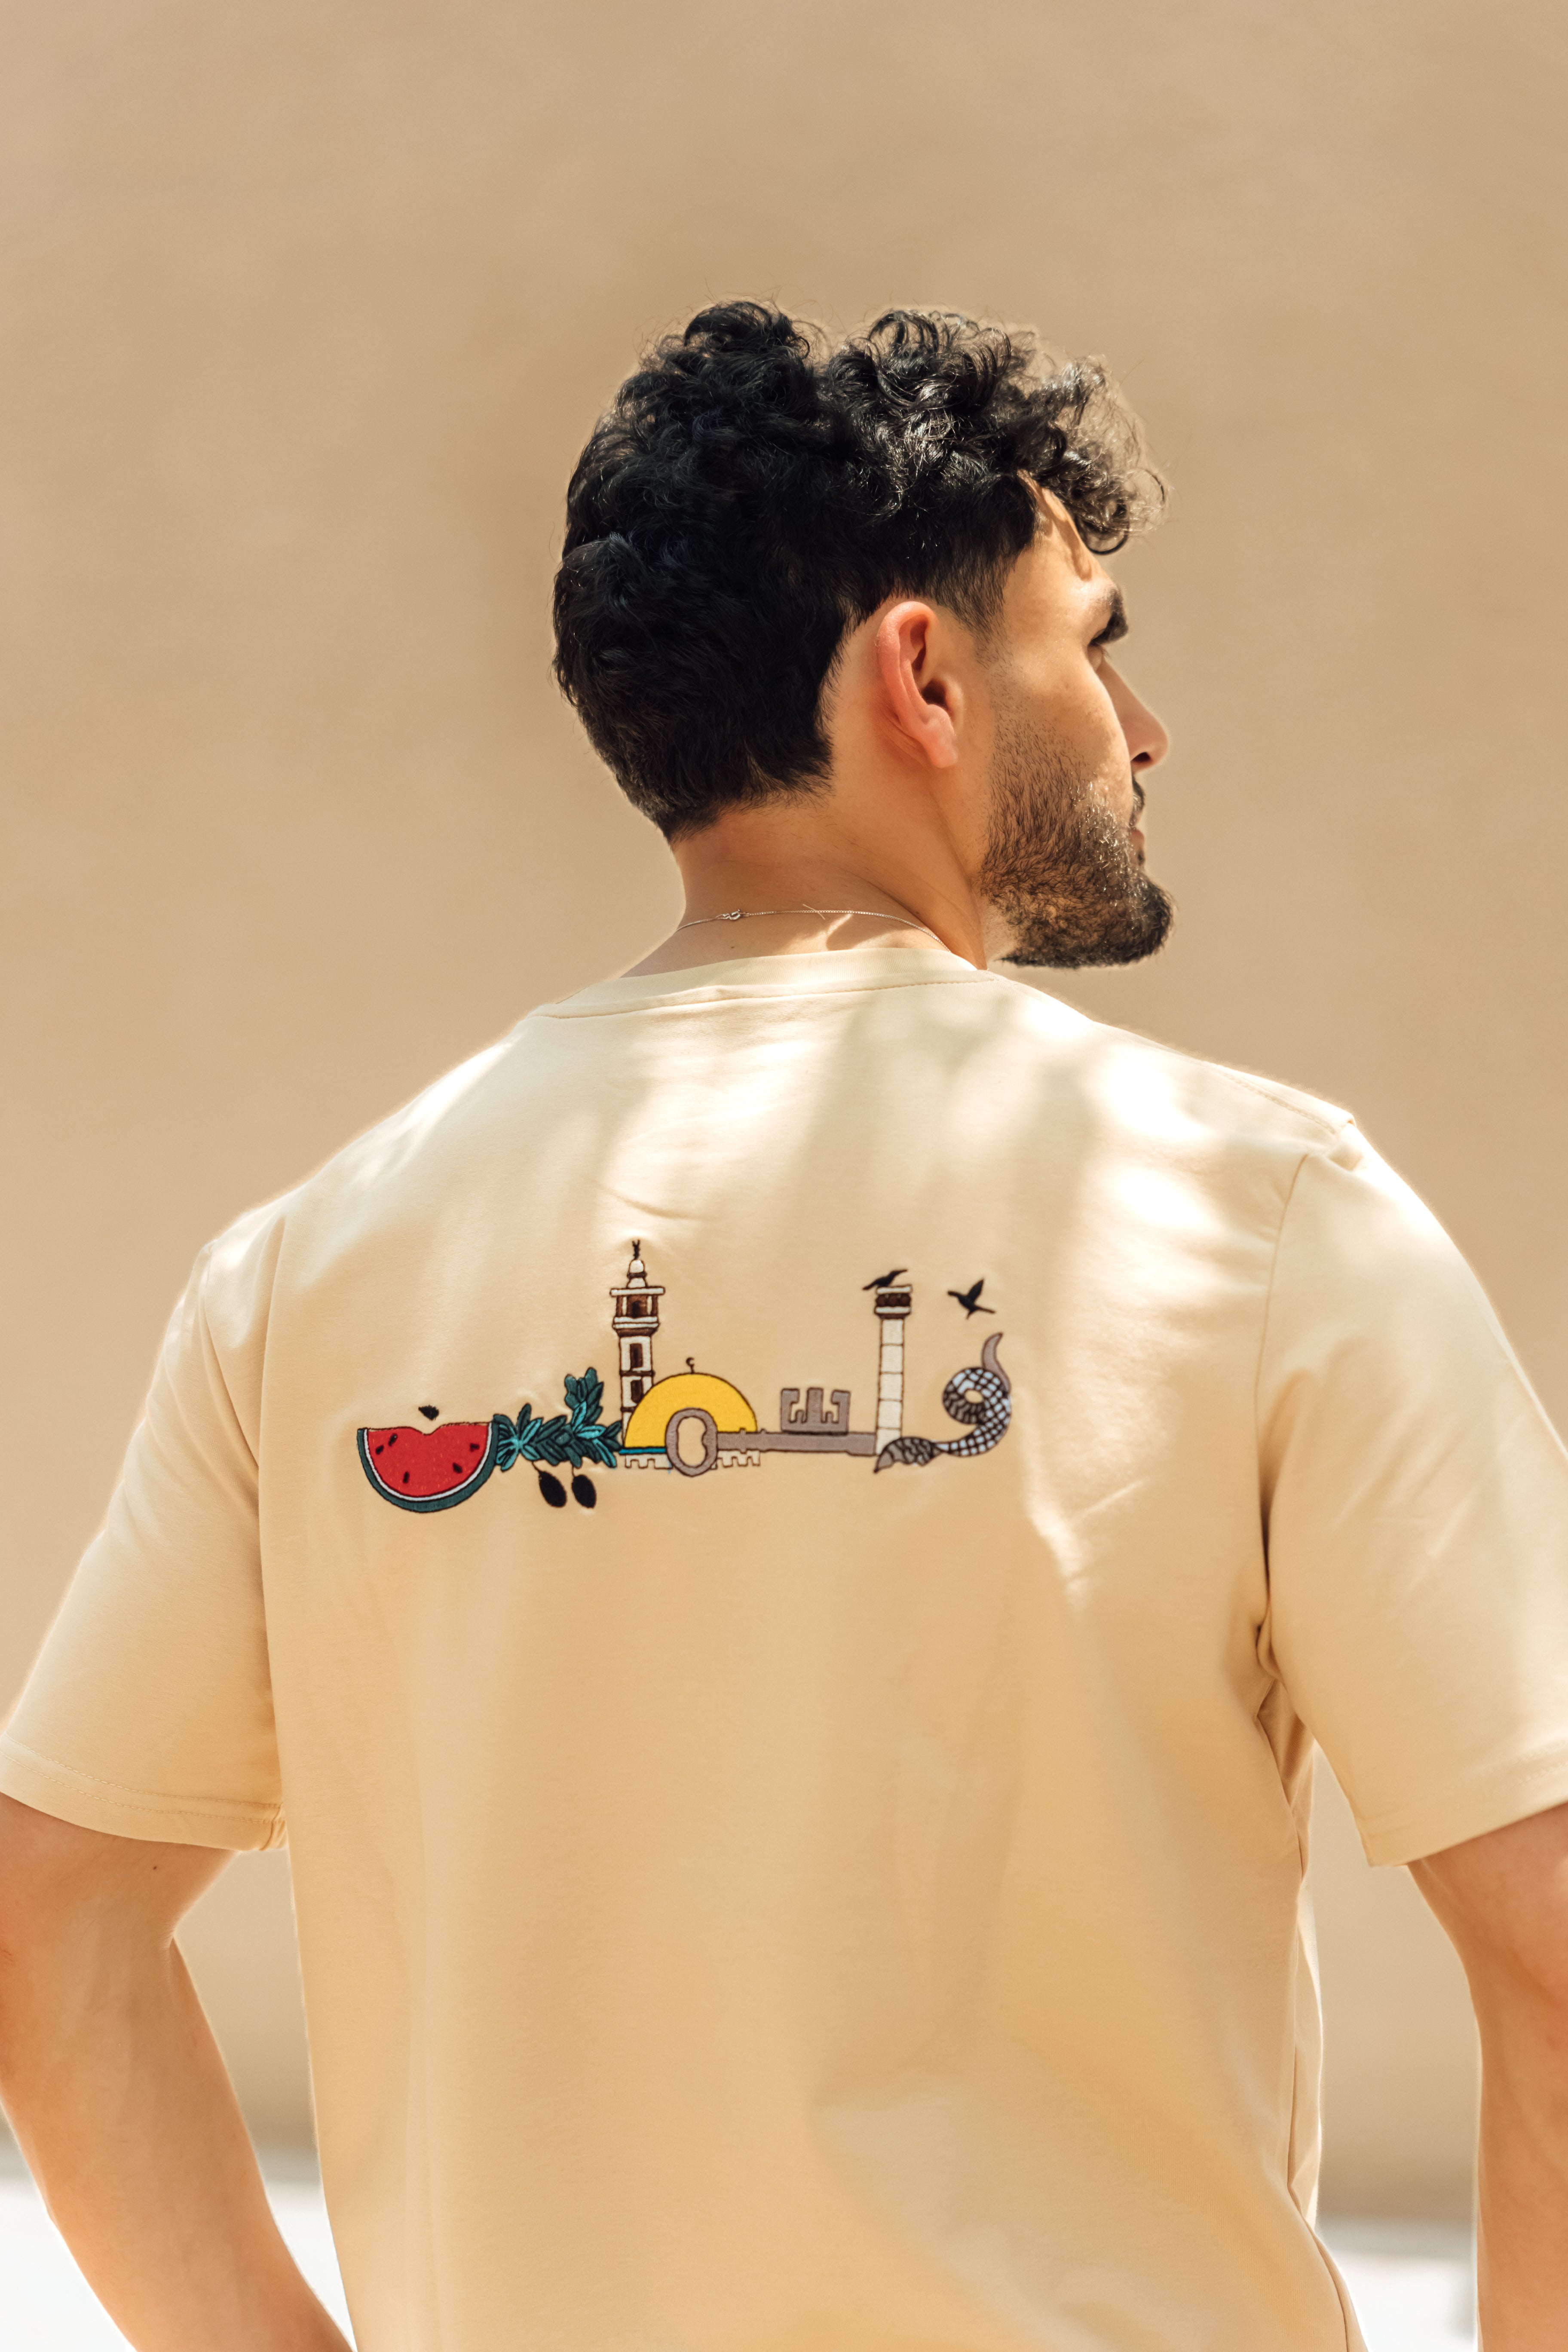 “Palestine” T-shirt